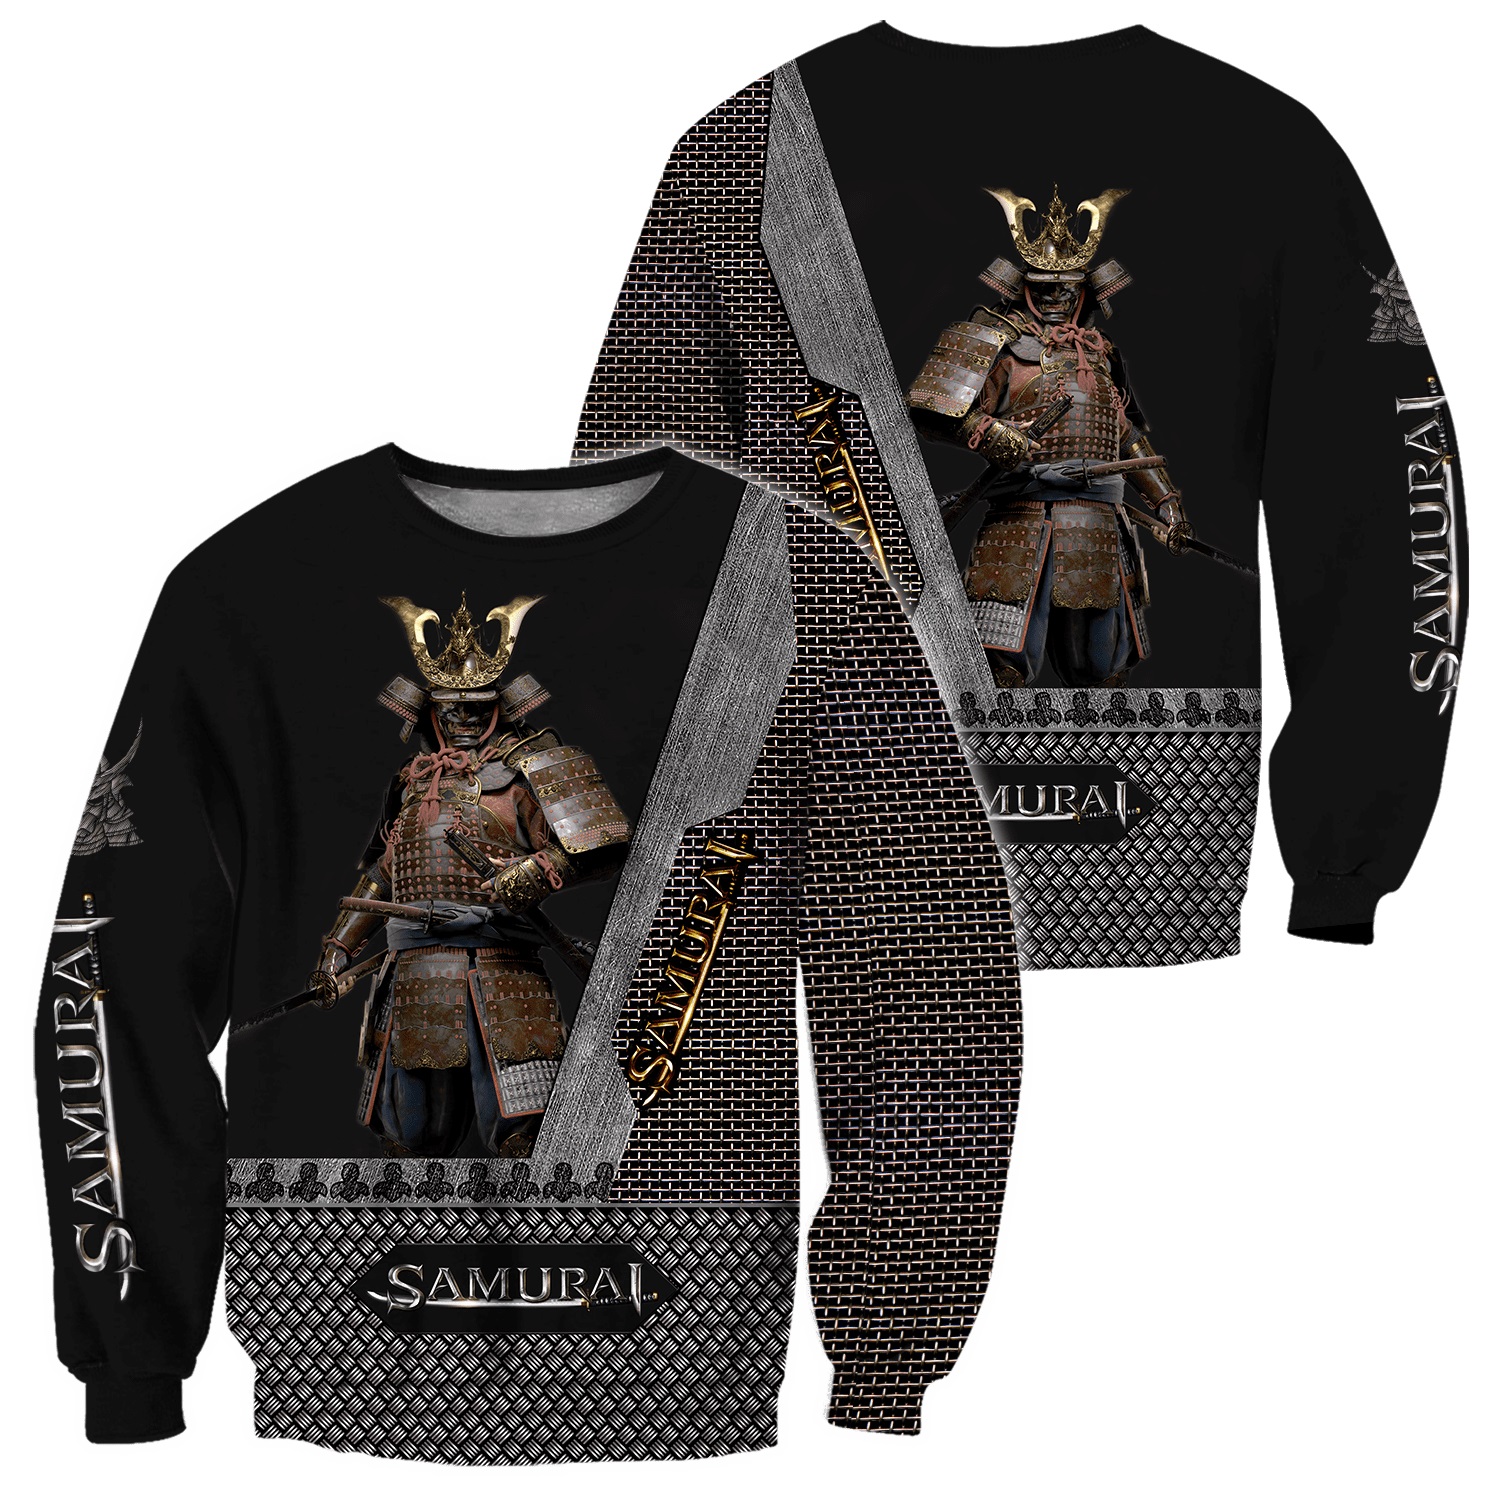 Samurai all over printed sweatshirt